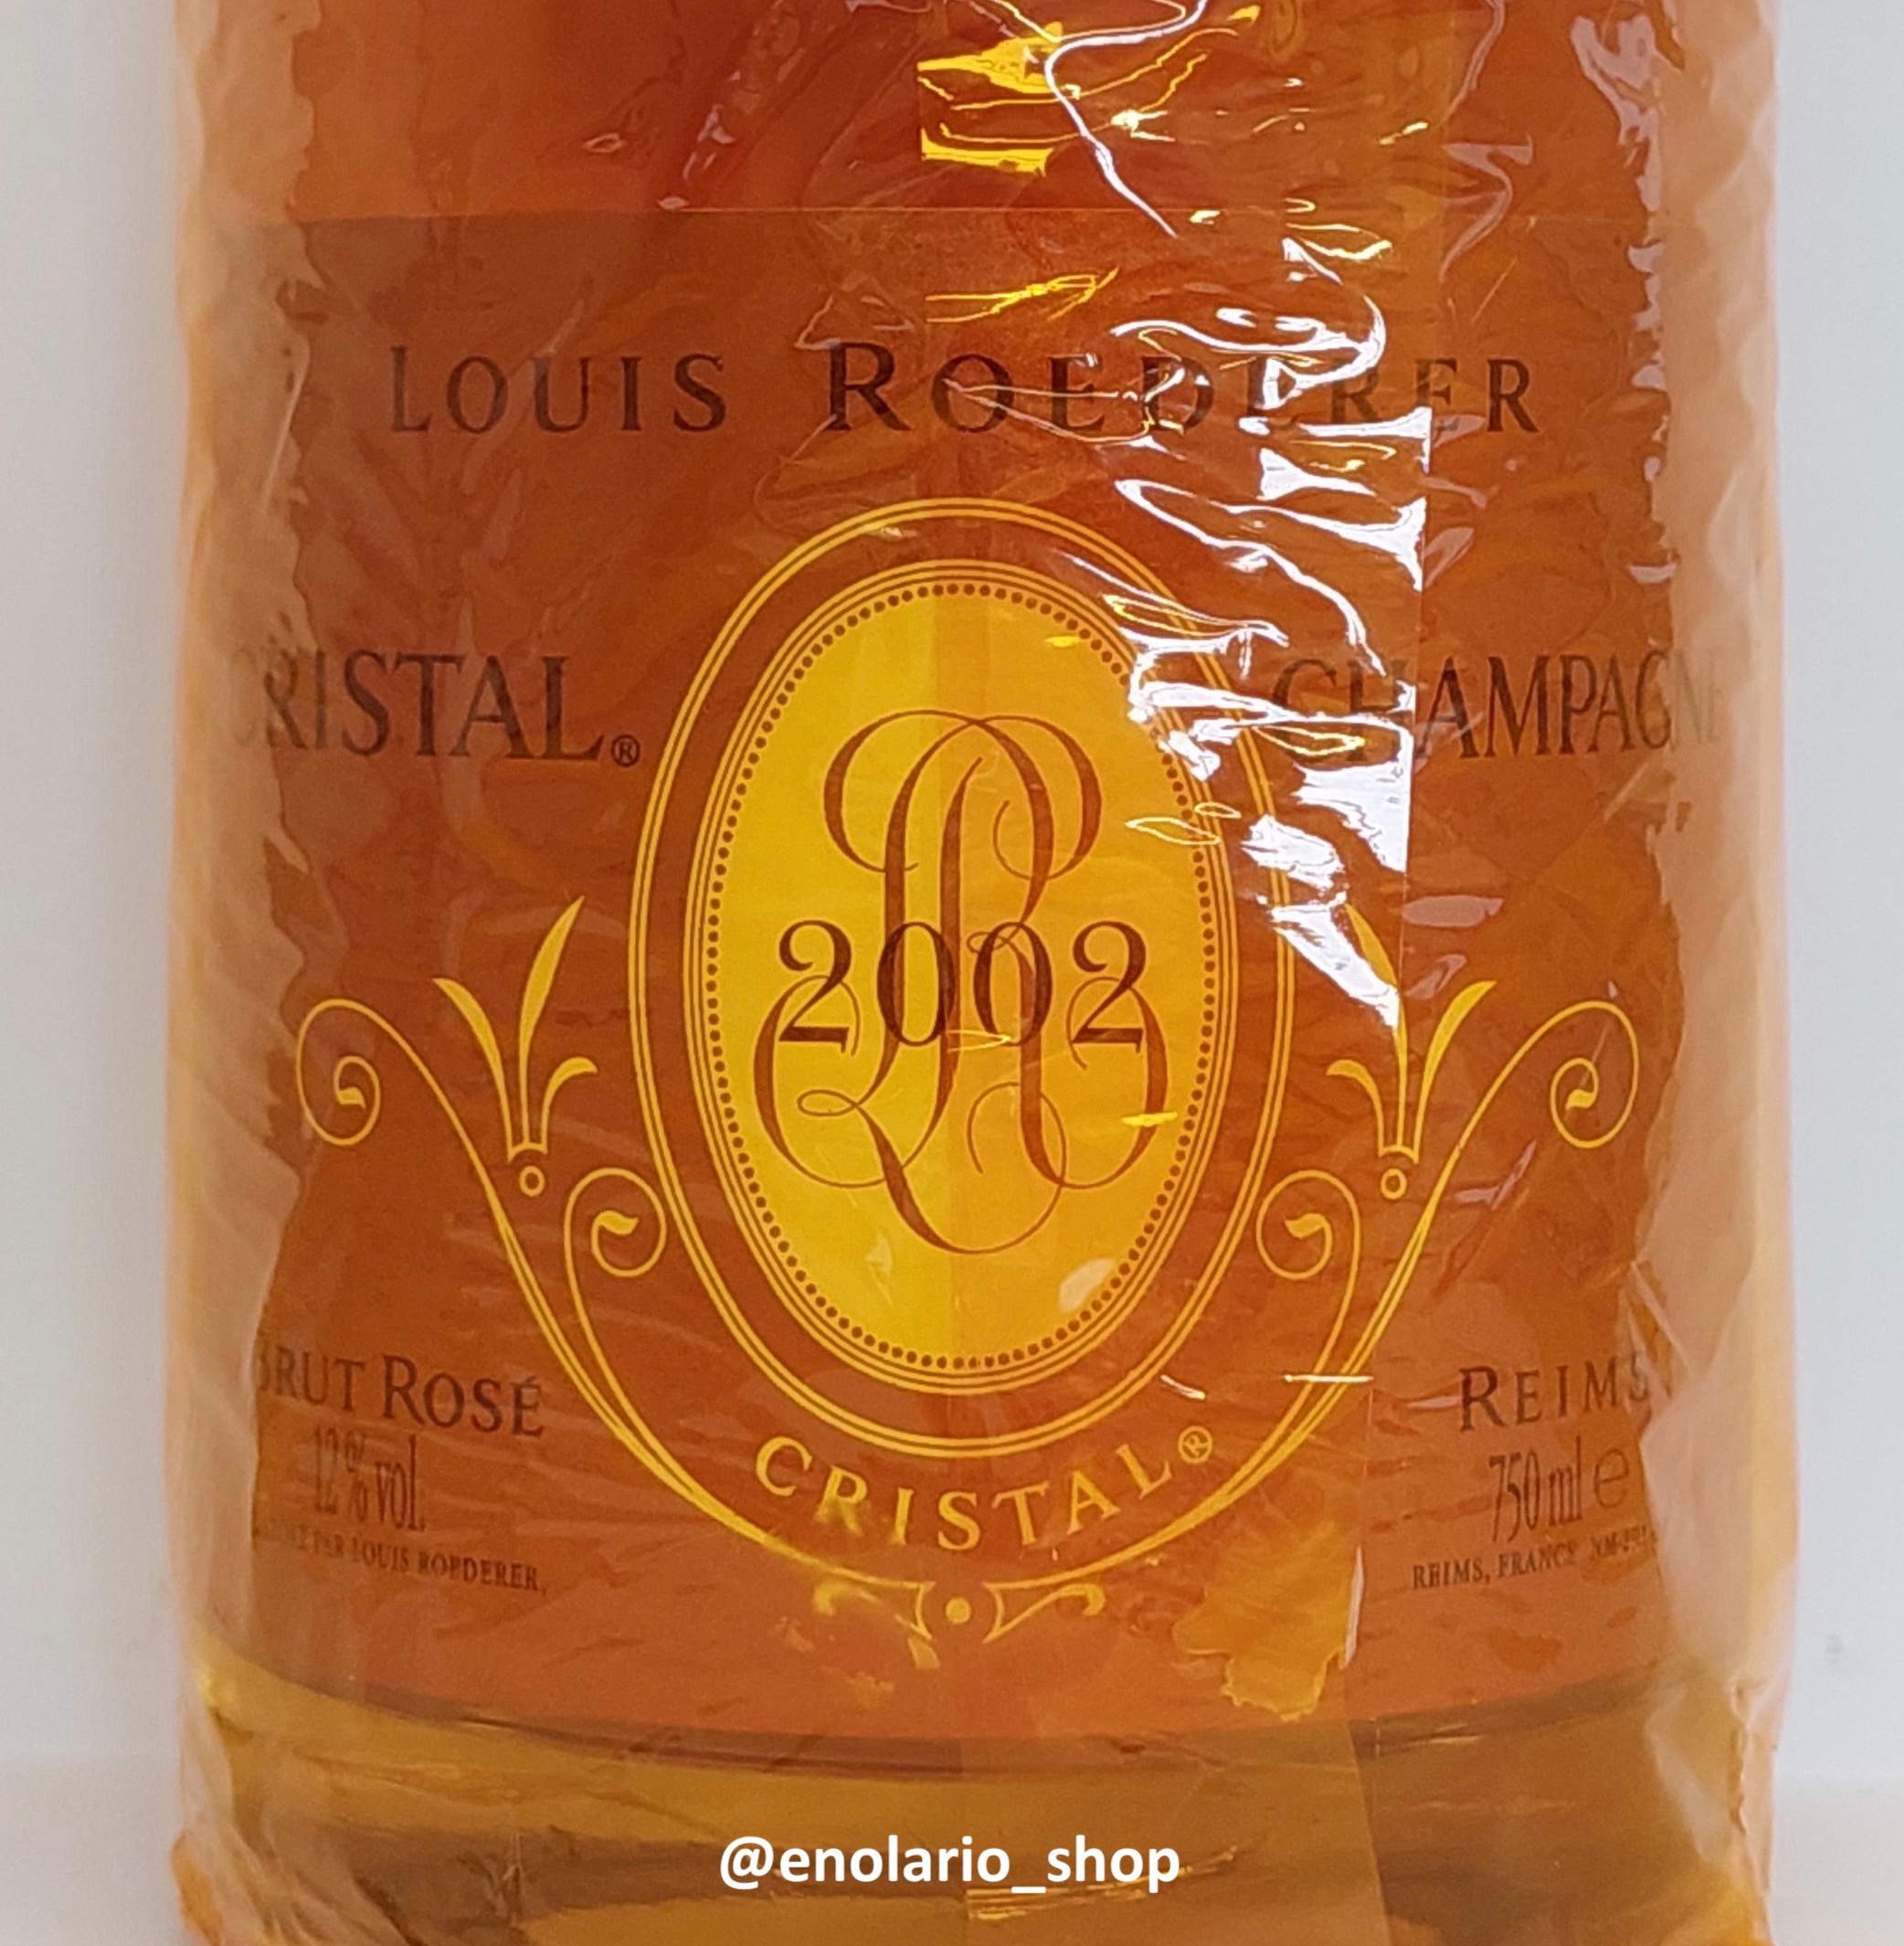 Louis Roederer Cristal Brut Rosé 2002